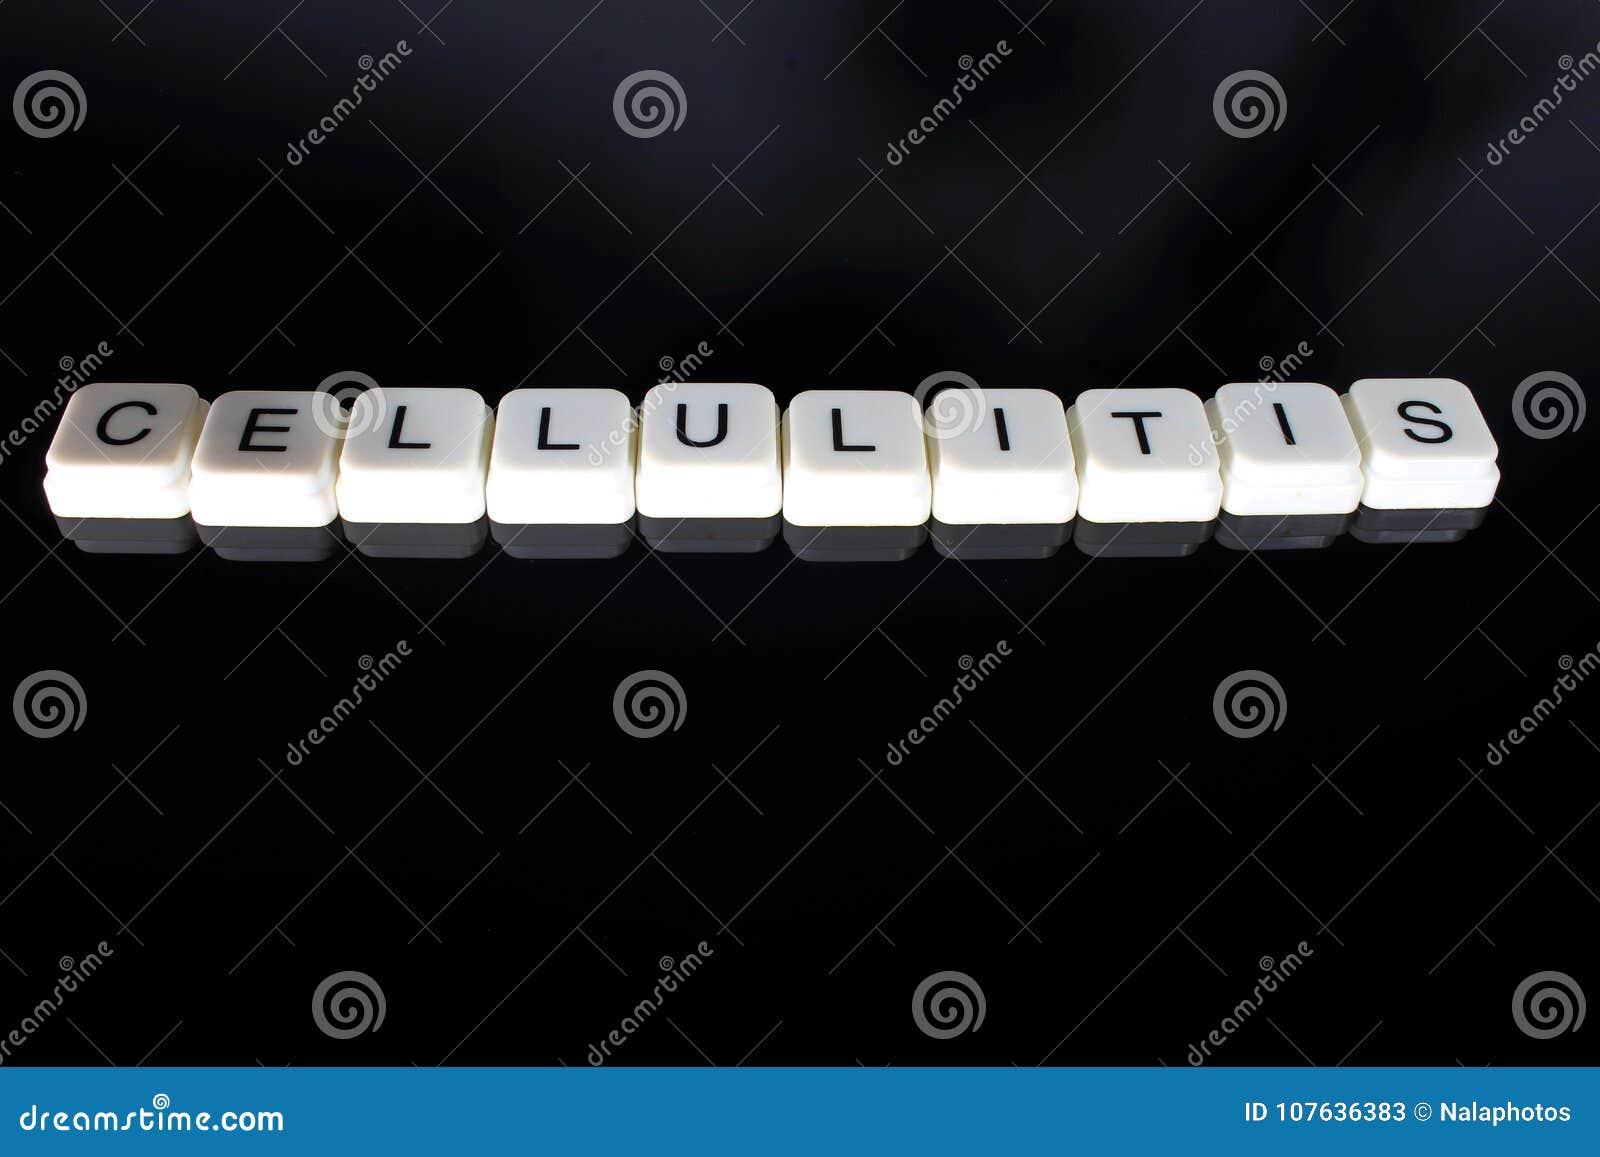 cellulitis text word title caption label cover backdrop background. alphabet letter toy blocks on black reflective